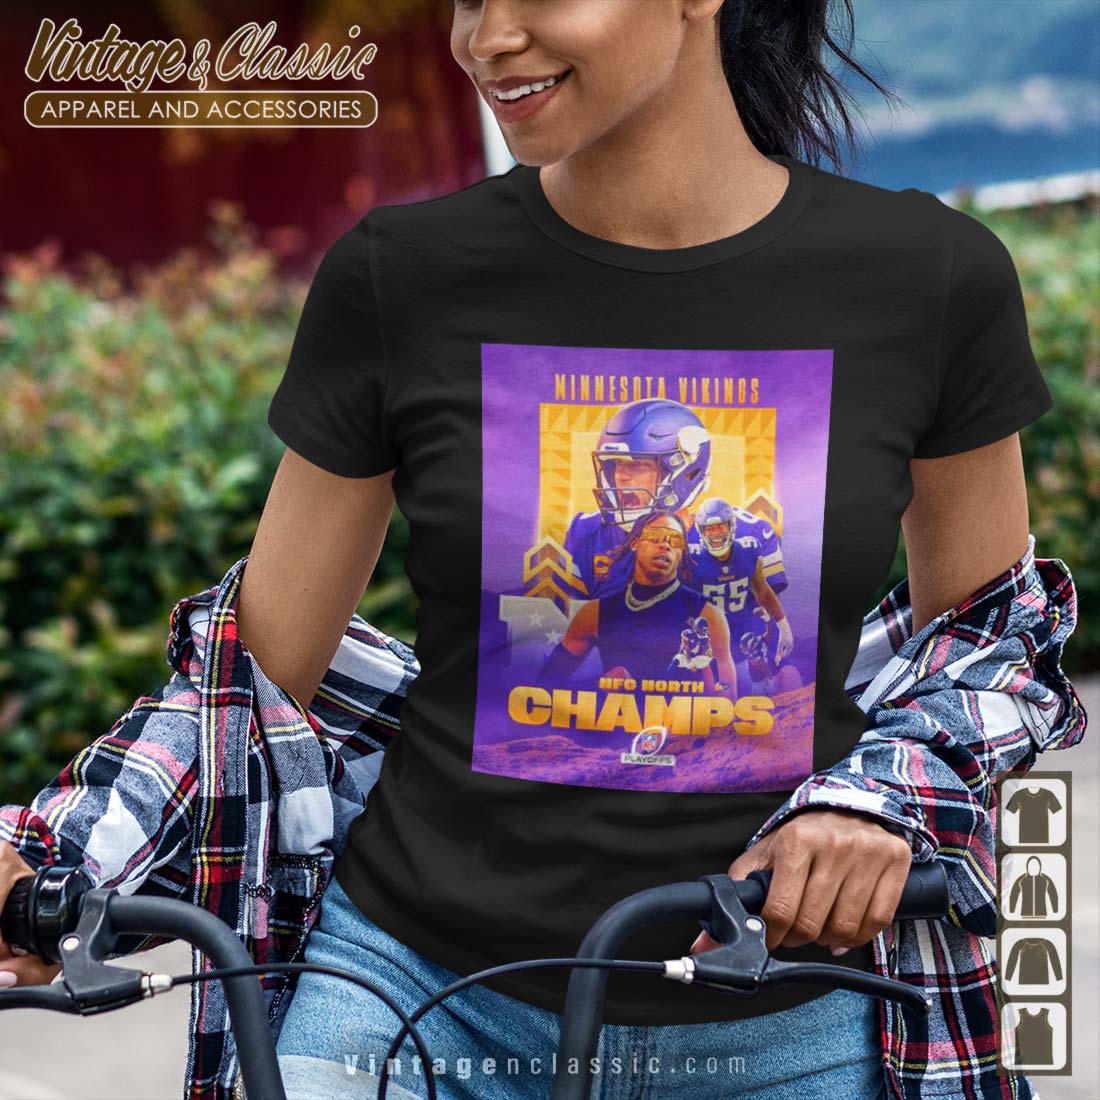 Minnesota Vikings NFC North Division Champions 2022 Shirt - High-Quality  Printed Brand